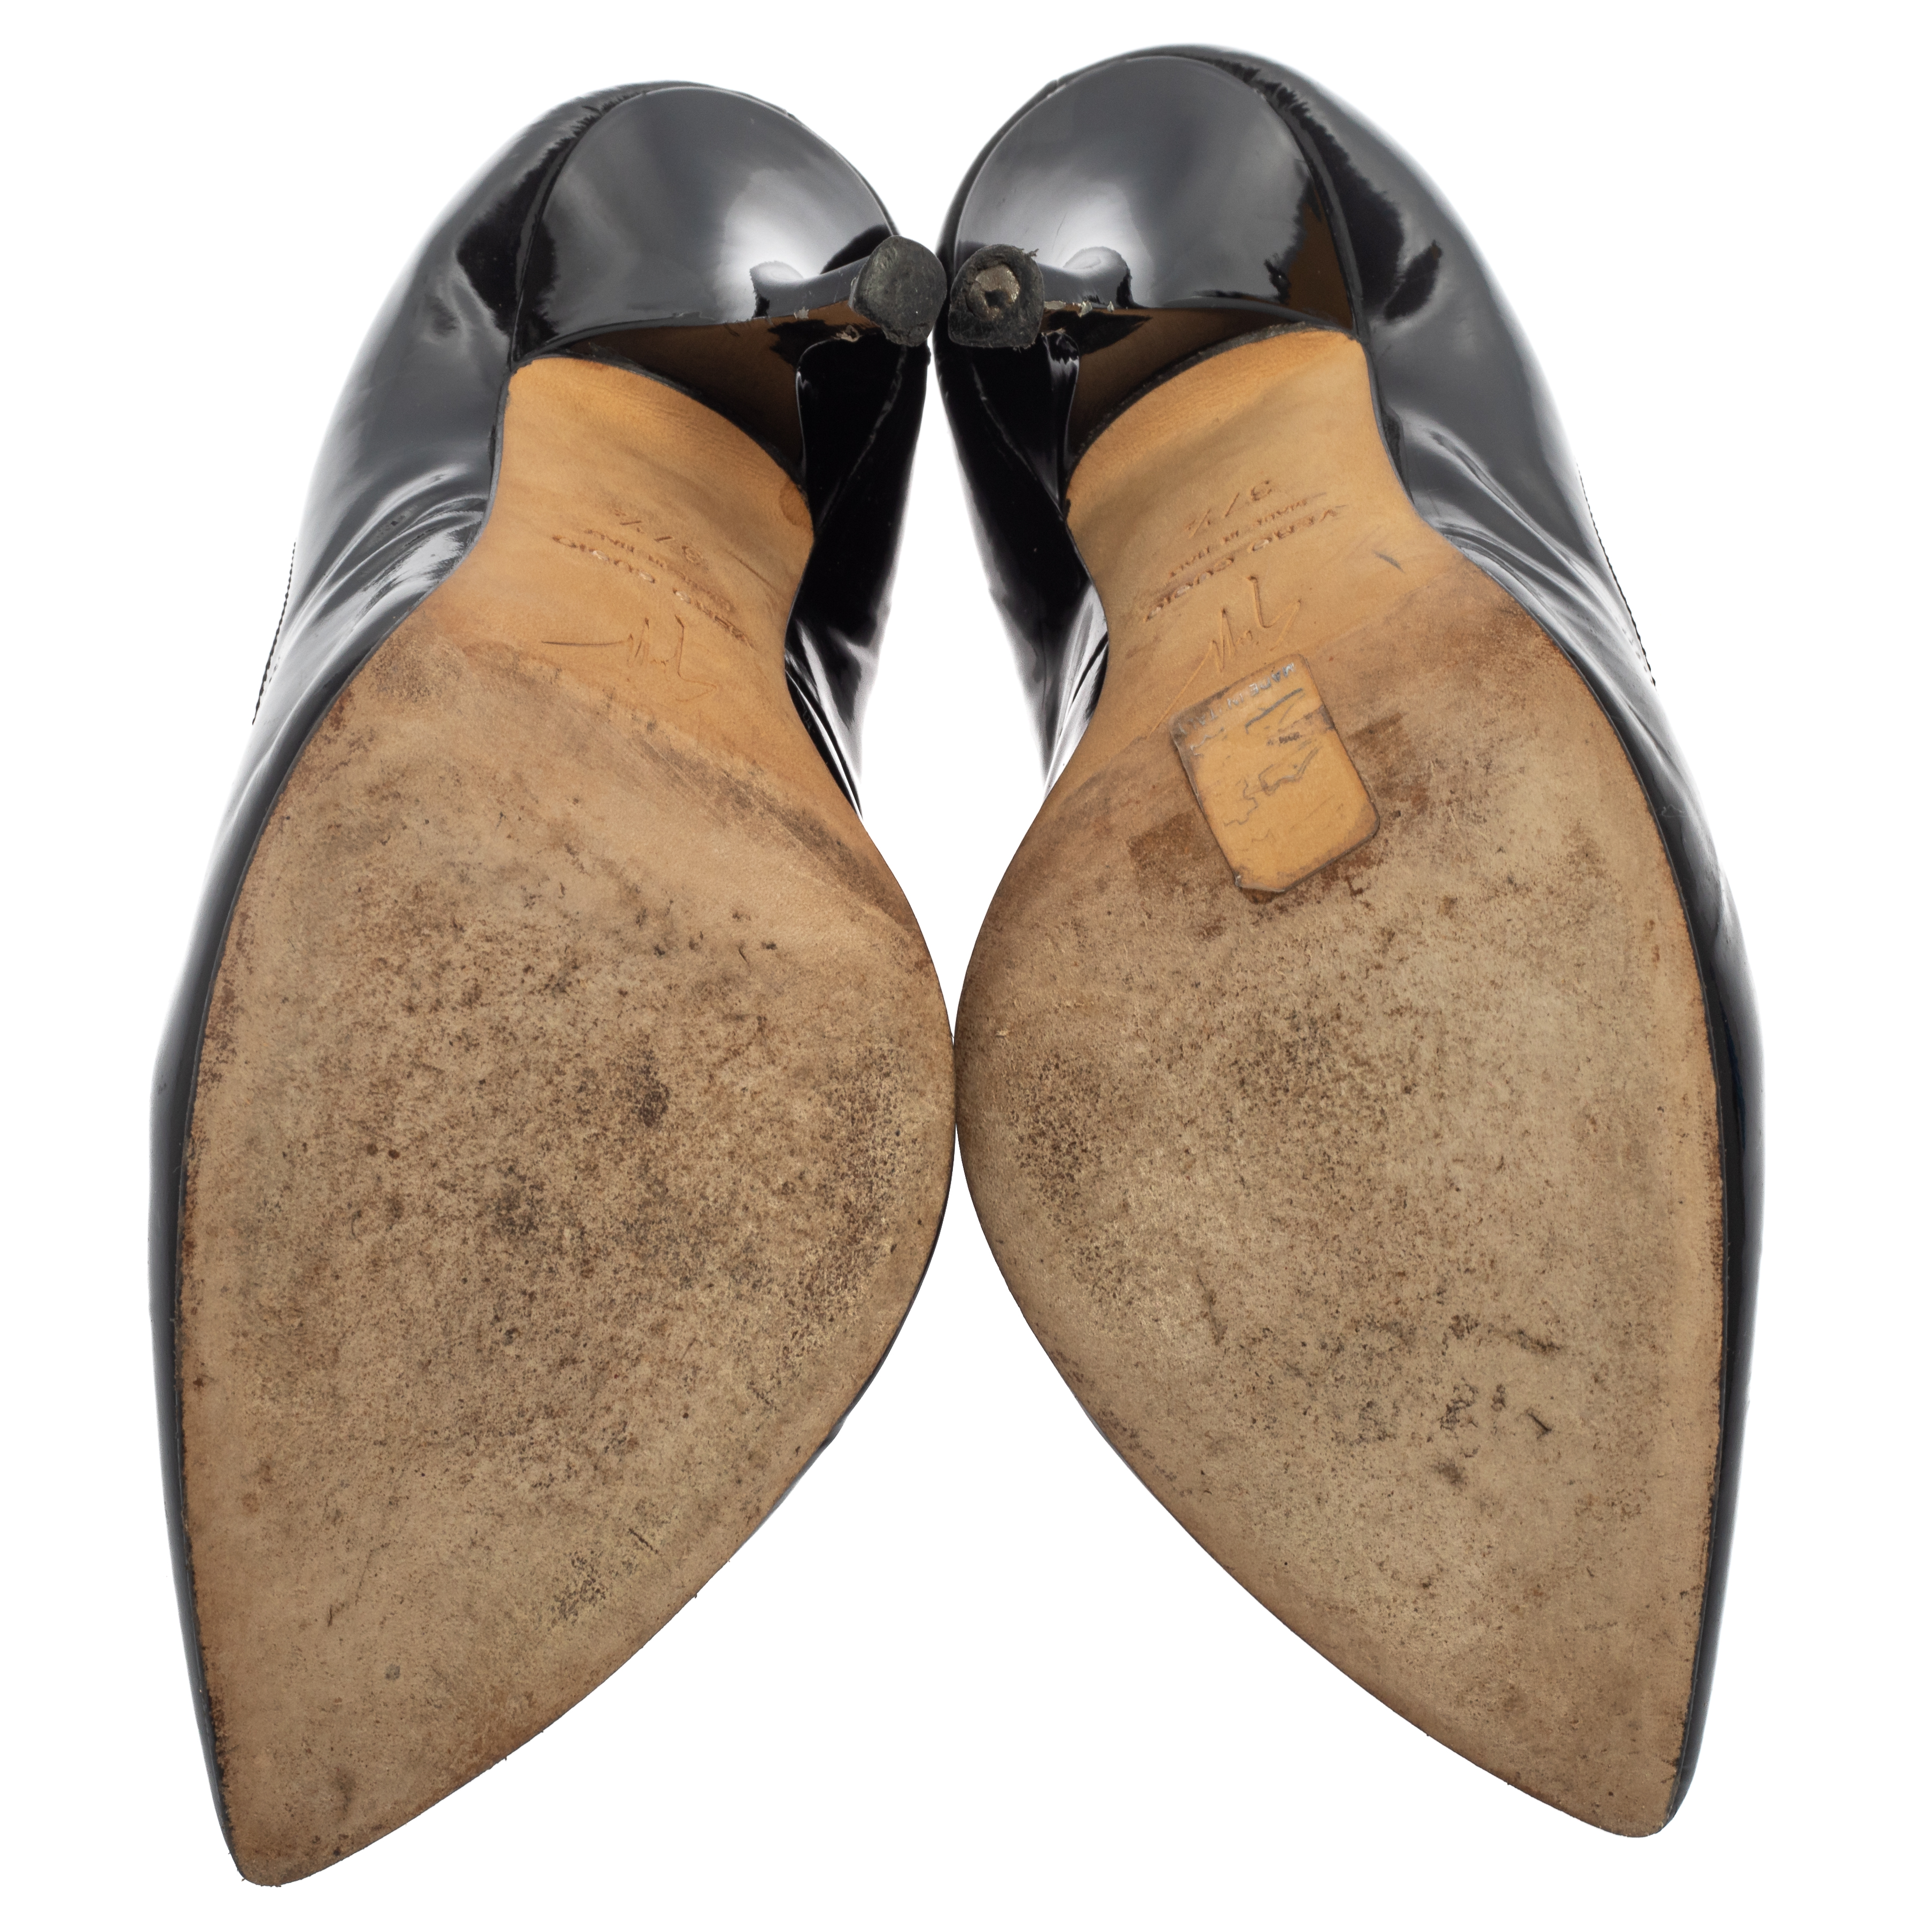 Giuseppe Zanotti Black Patent Leather Pointed Toe Pumps Size 37.5